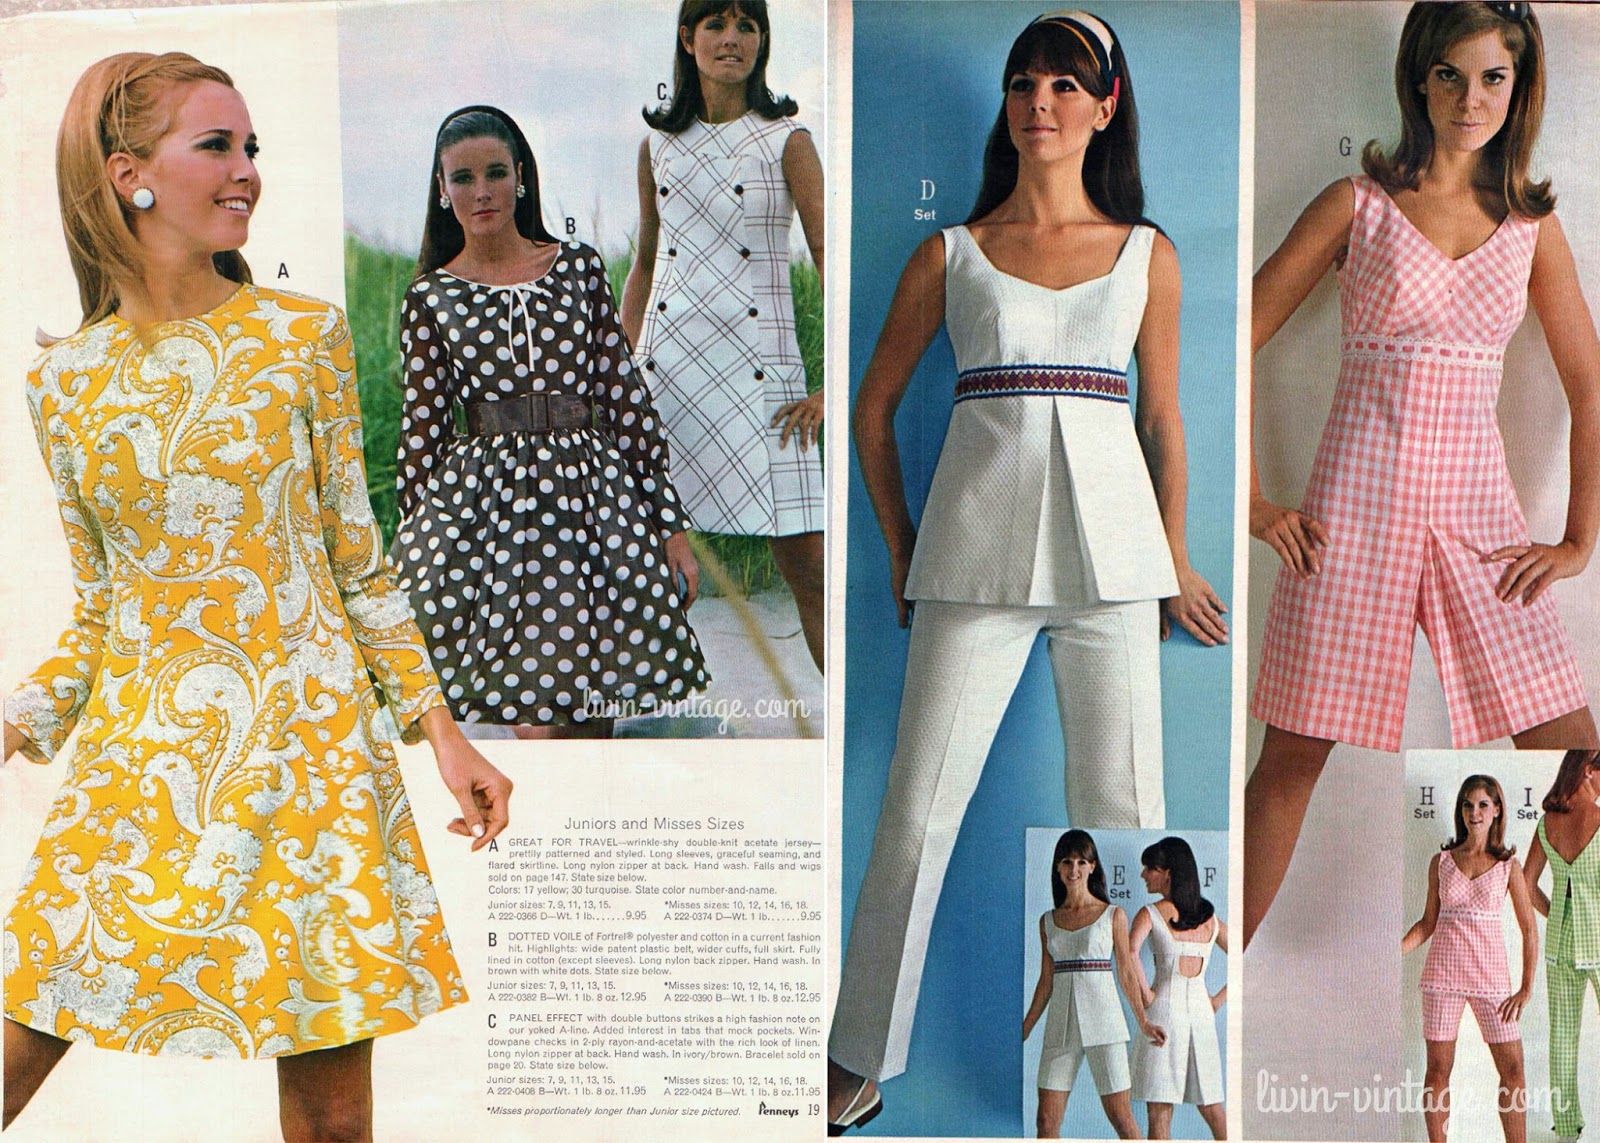 livin vintage 1969 Women's Fashion via JC Penny's Catalog